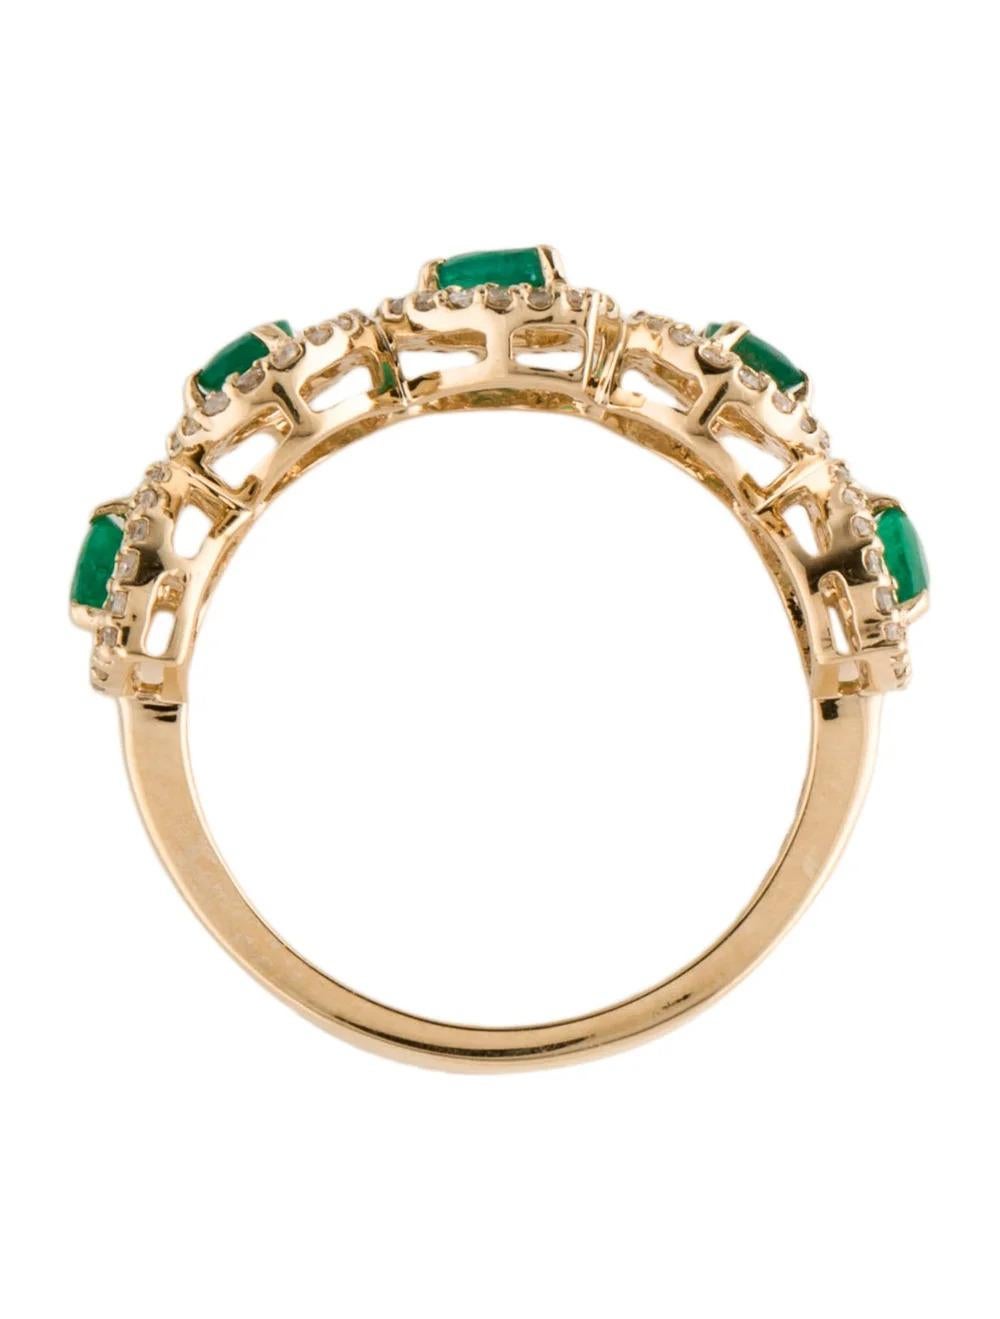 Women's 14K Emerald & Diamond Band Ring, Size 6.75: Elegant Green Gemstones, Luxury For Sale